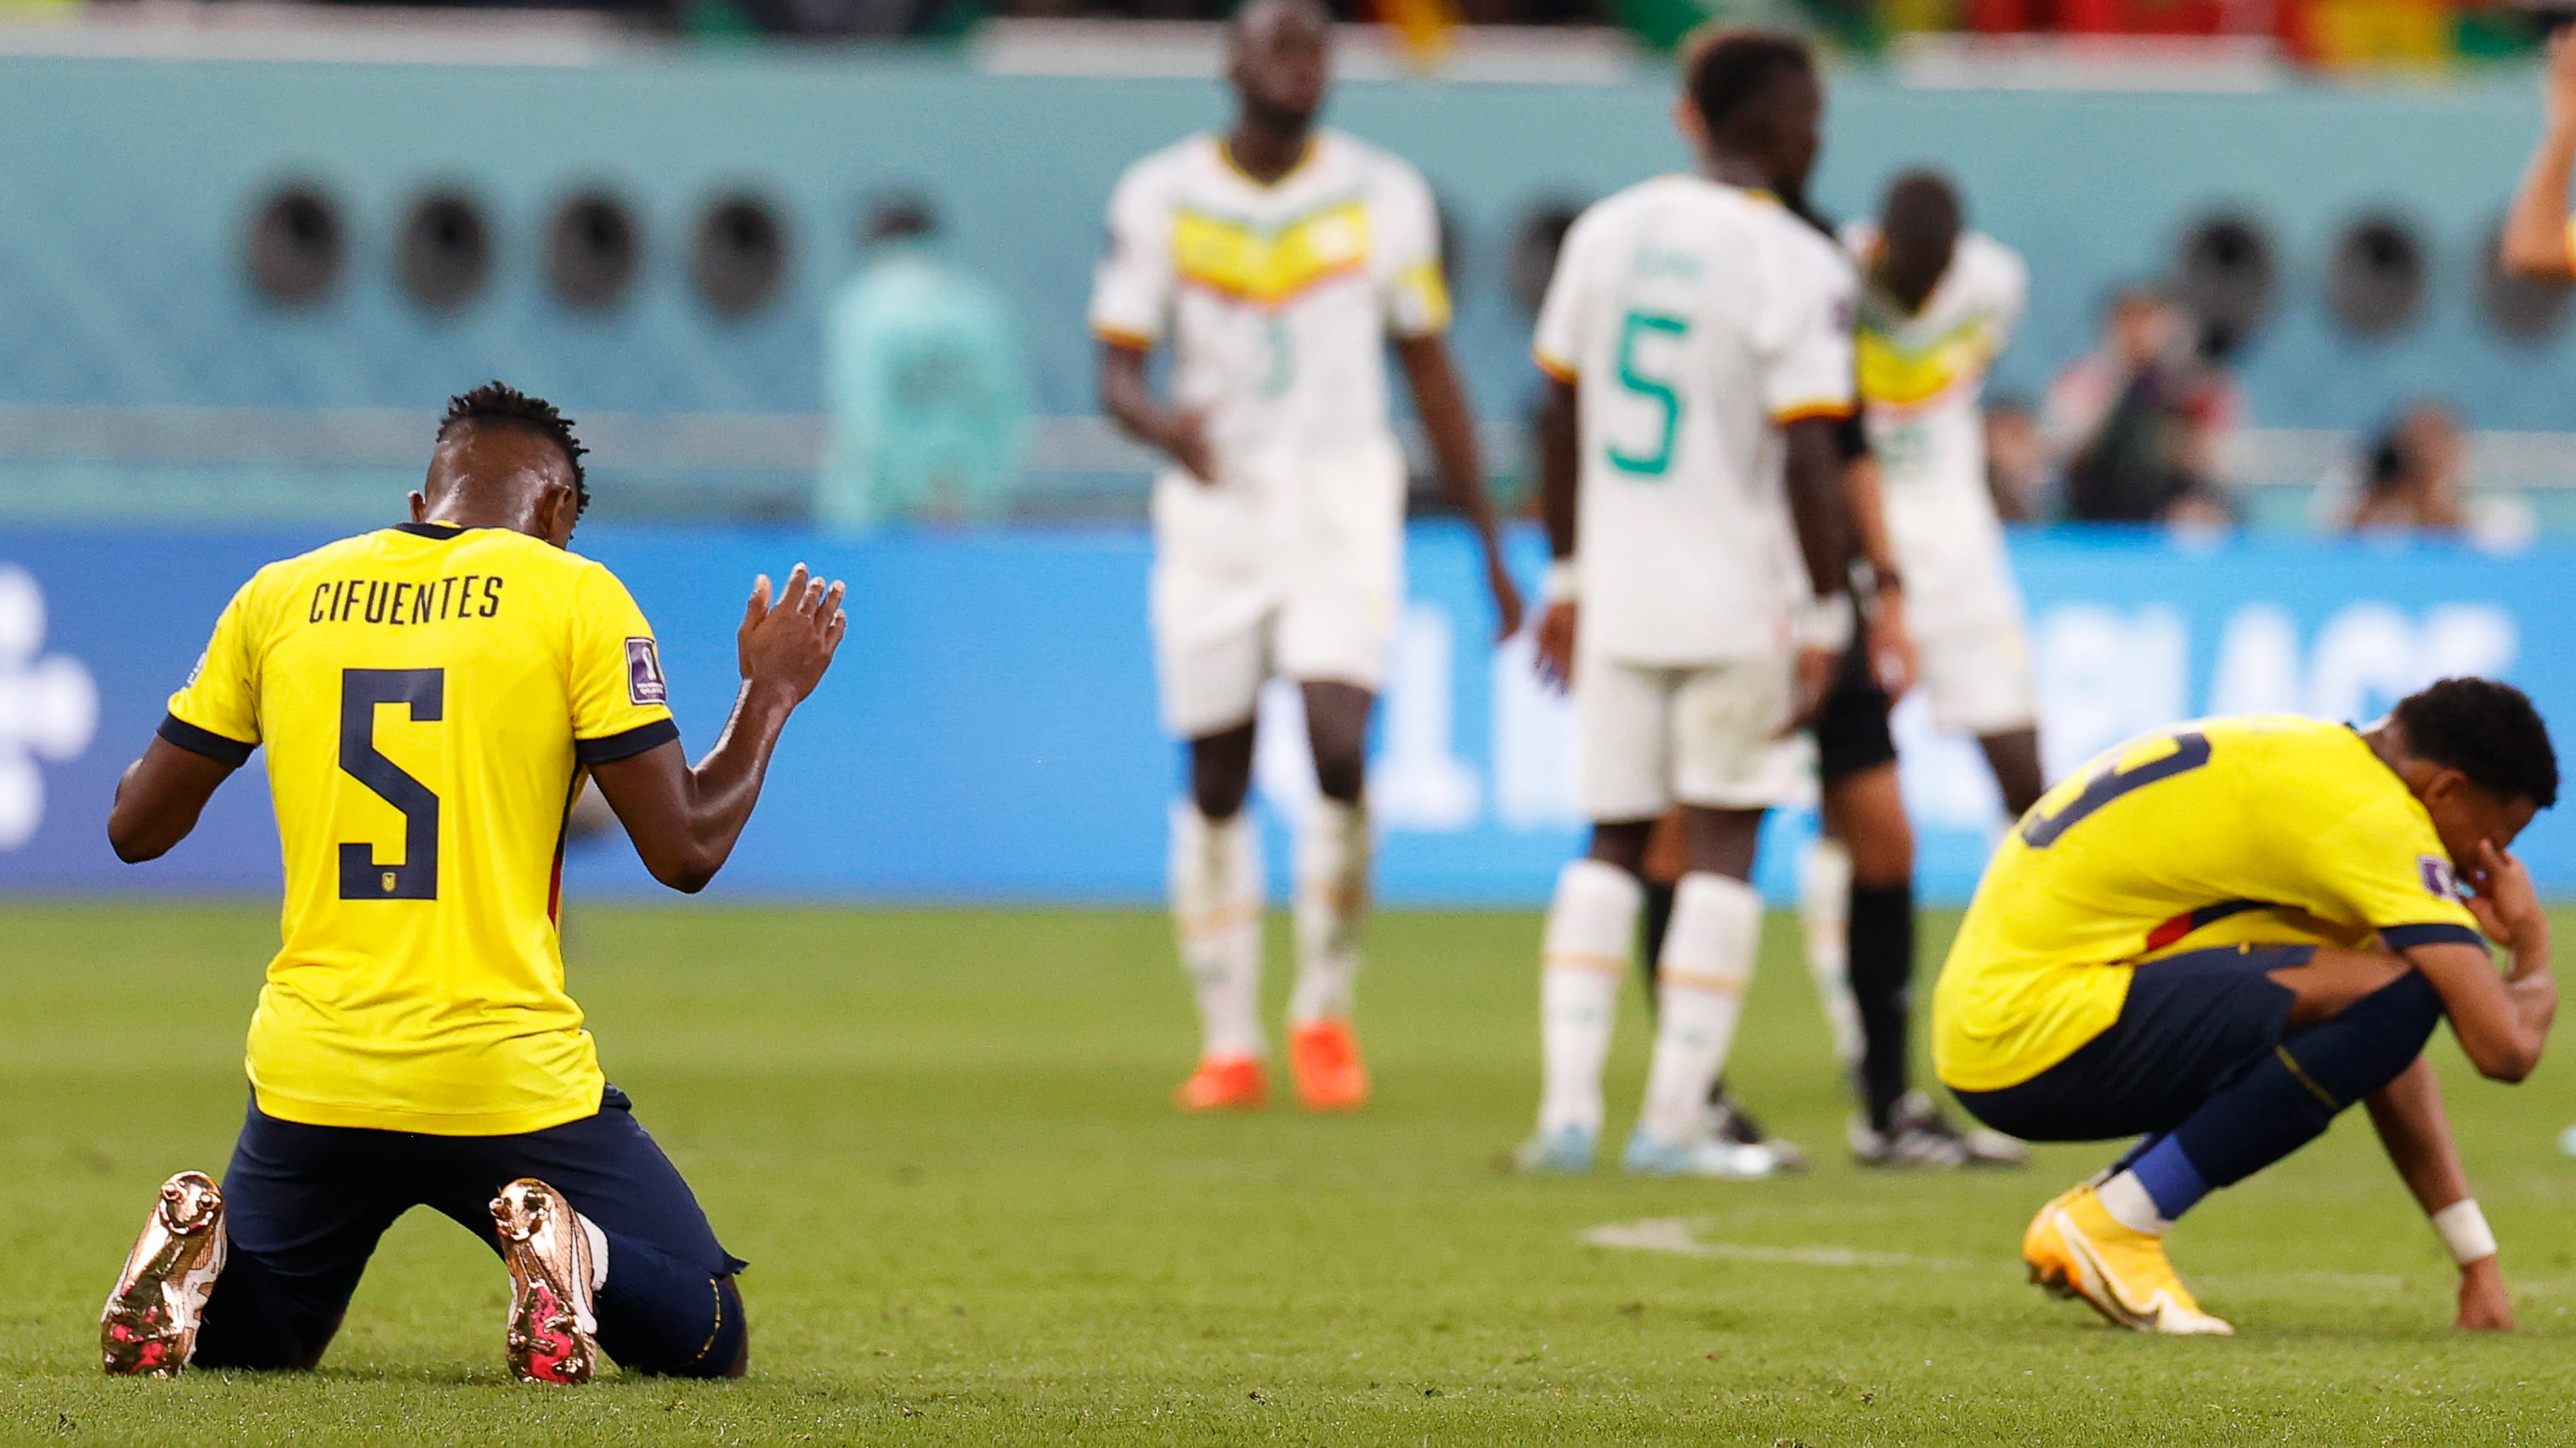 Jose Cifuentes (L) of Ecuador reacts after the FIFA World Cup 2022 group A soccer match between Ecuador and Senegal at Khalifa International Stadium in Doha, Qatar, 29 November 2022.